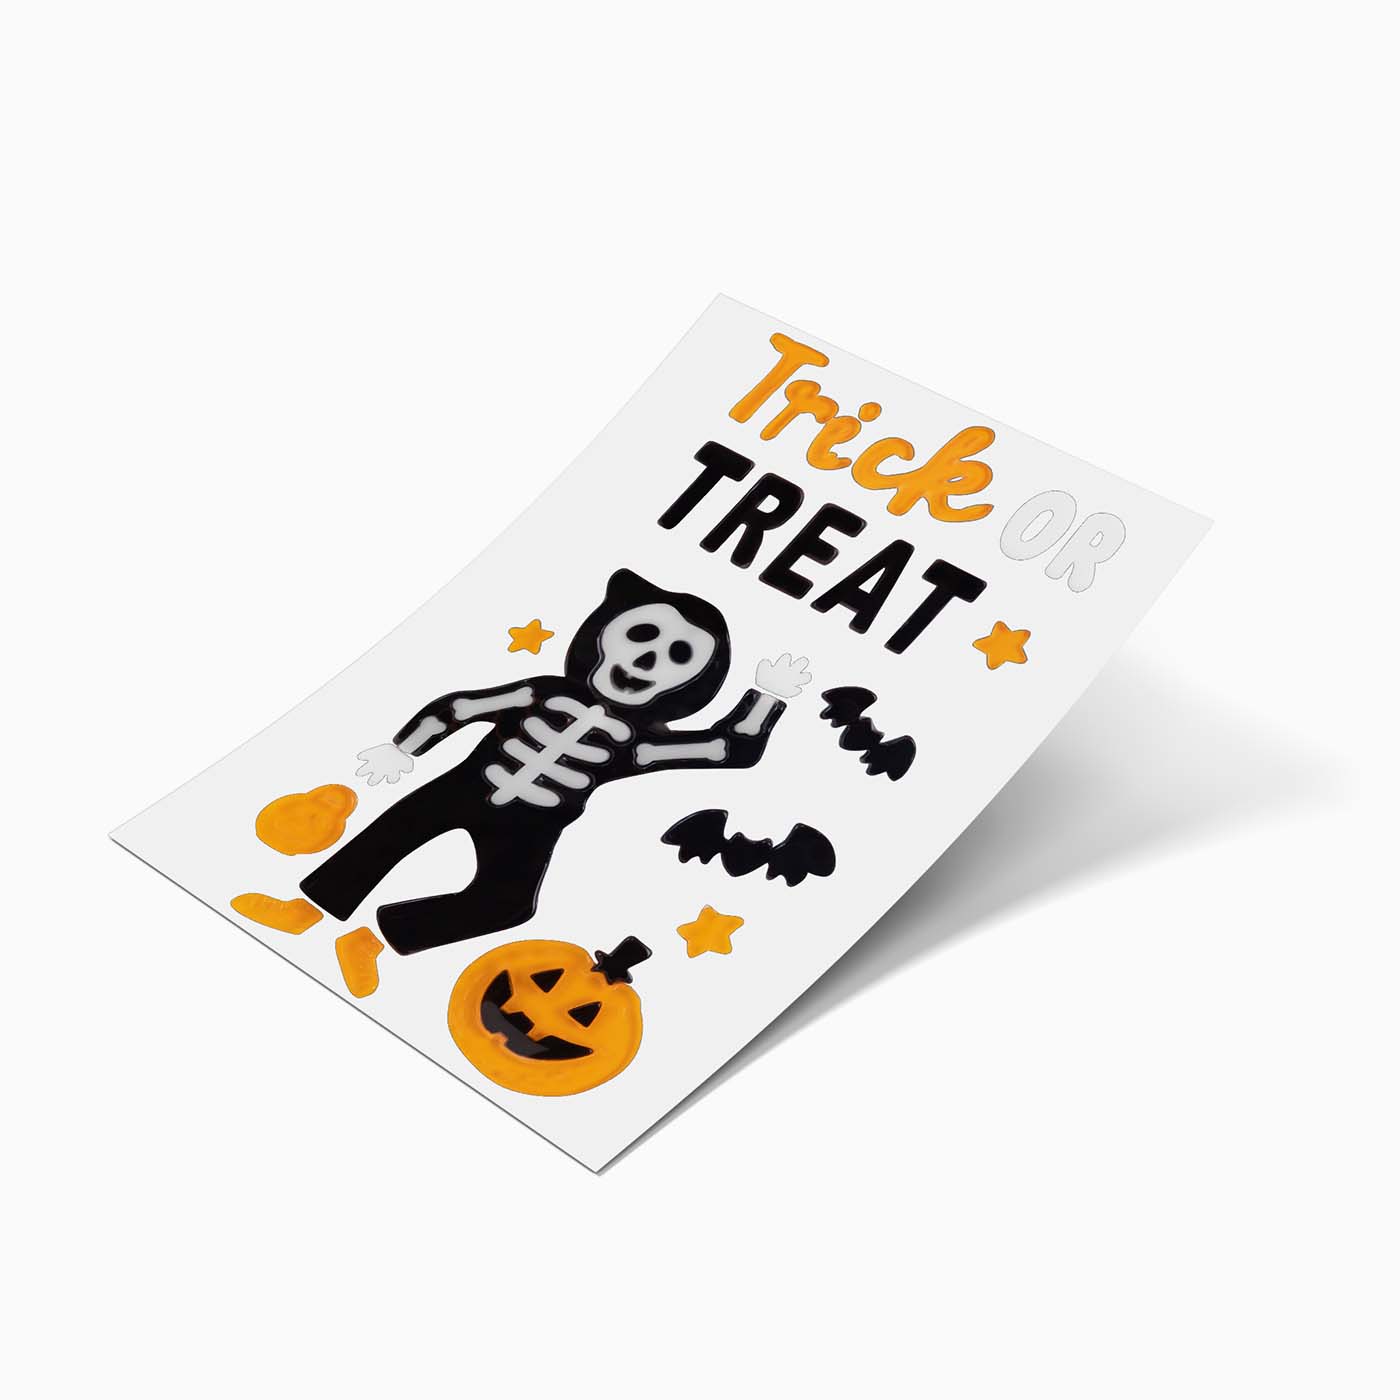 Pegatina Gel "Trick or Treat" Halloween